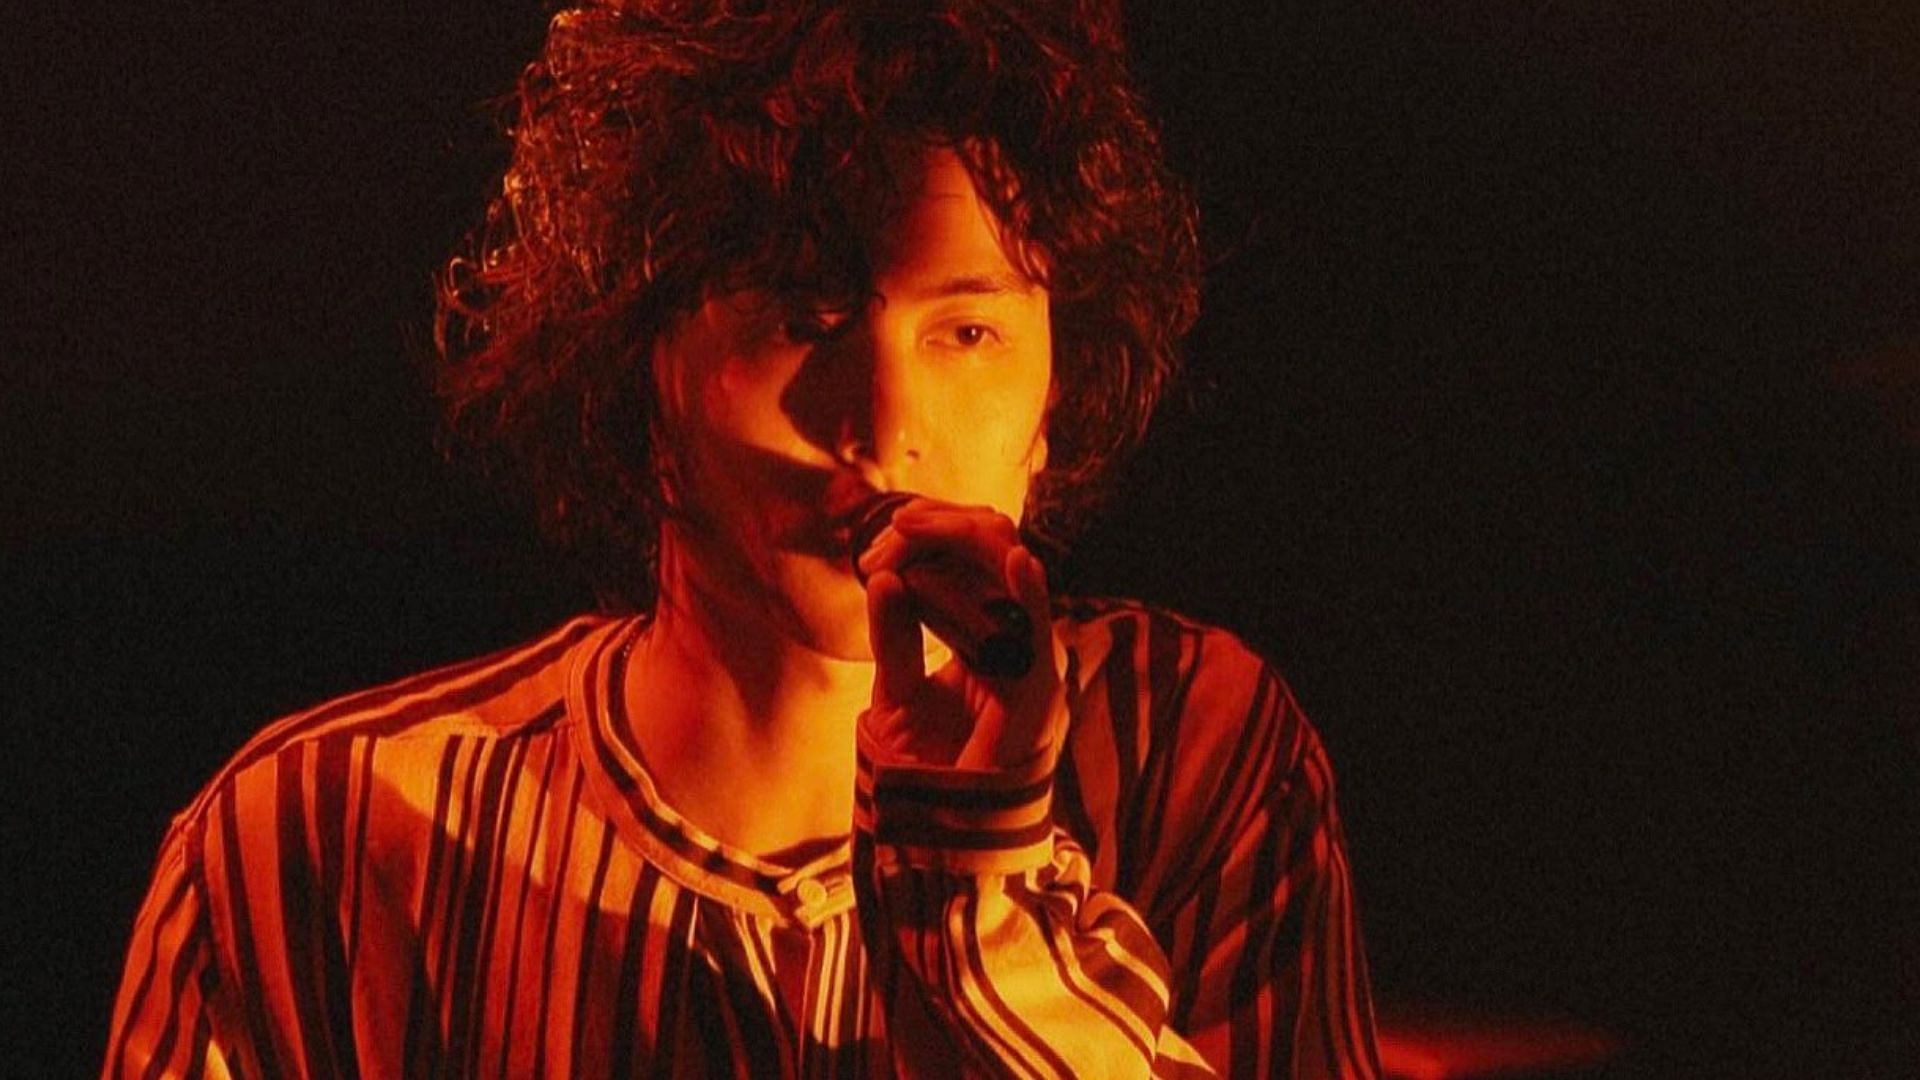 Ranked 5 of Japanese R&B artist Fujii Kaze's live performances